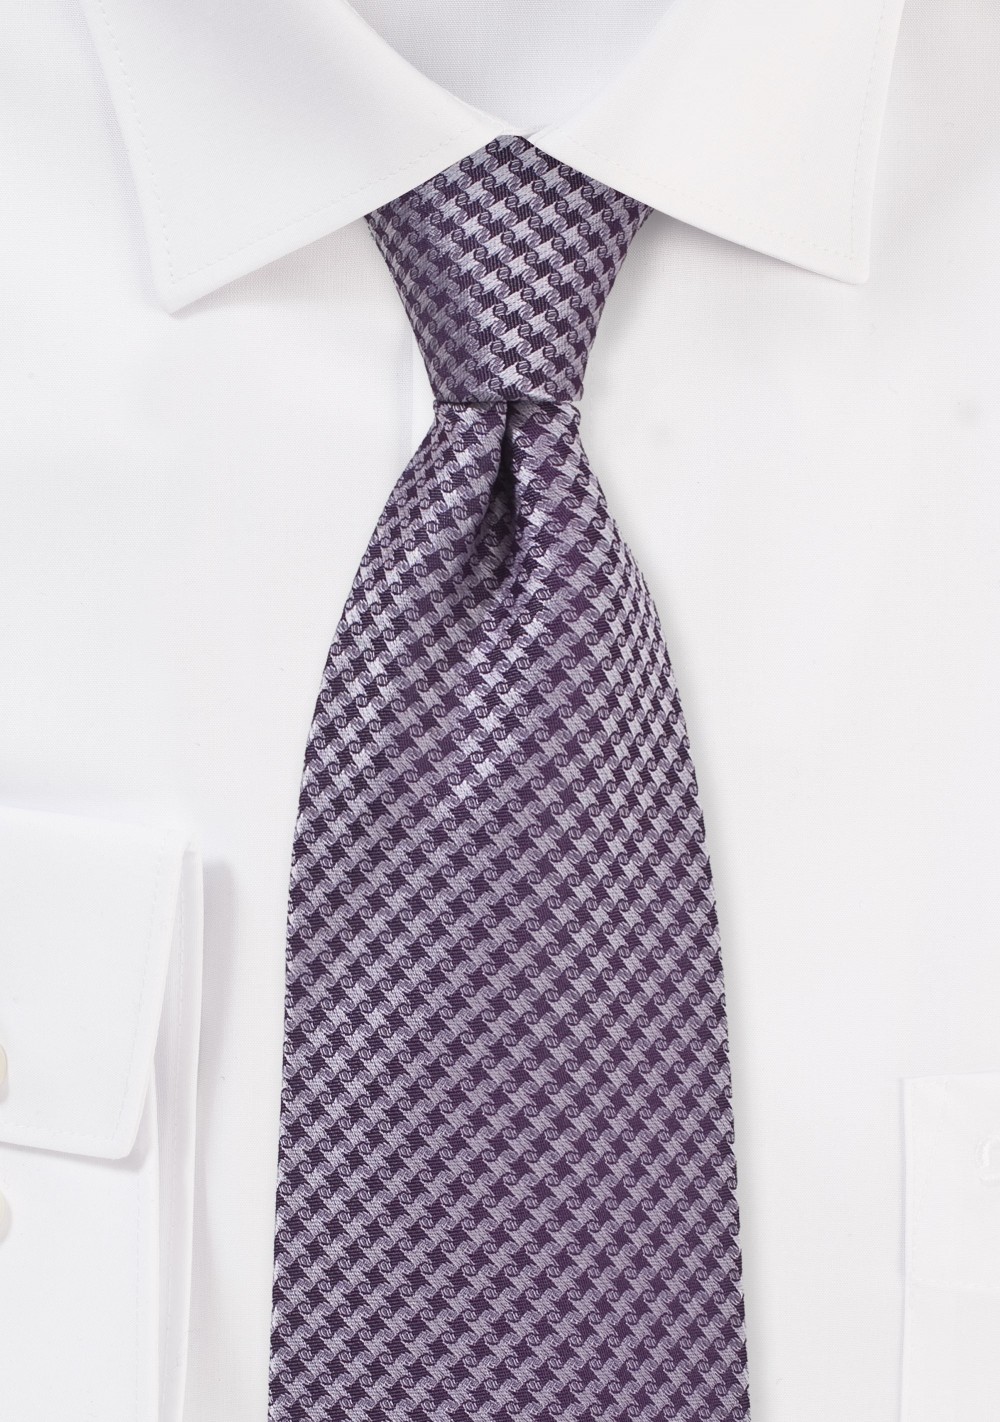 Micro Check Tie in Amethyst Purple